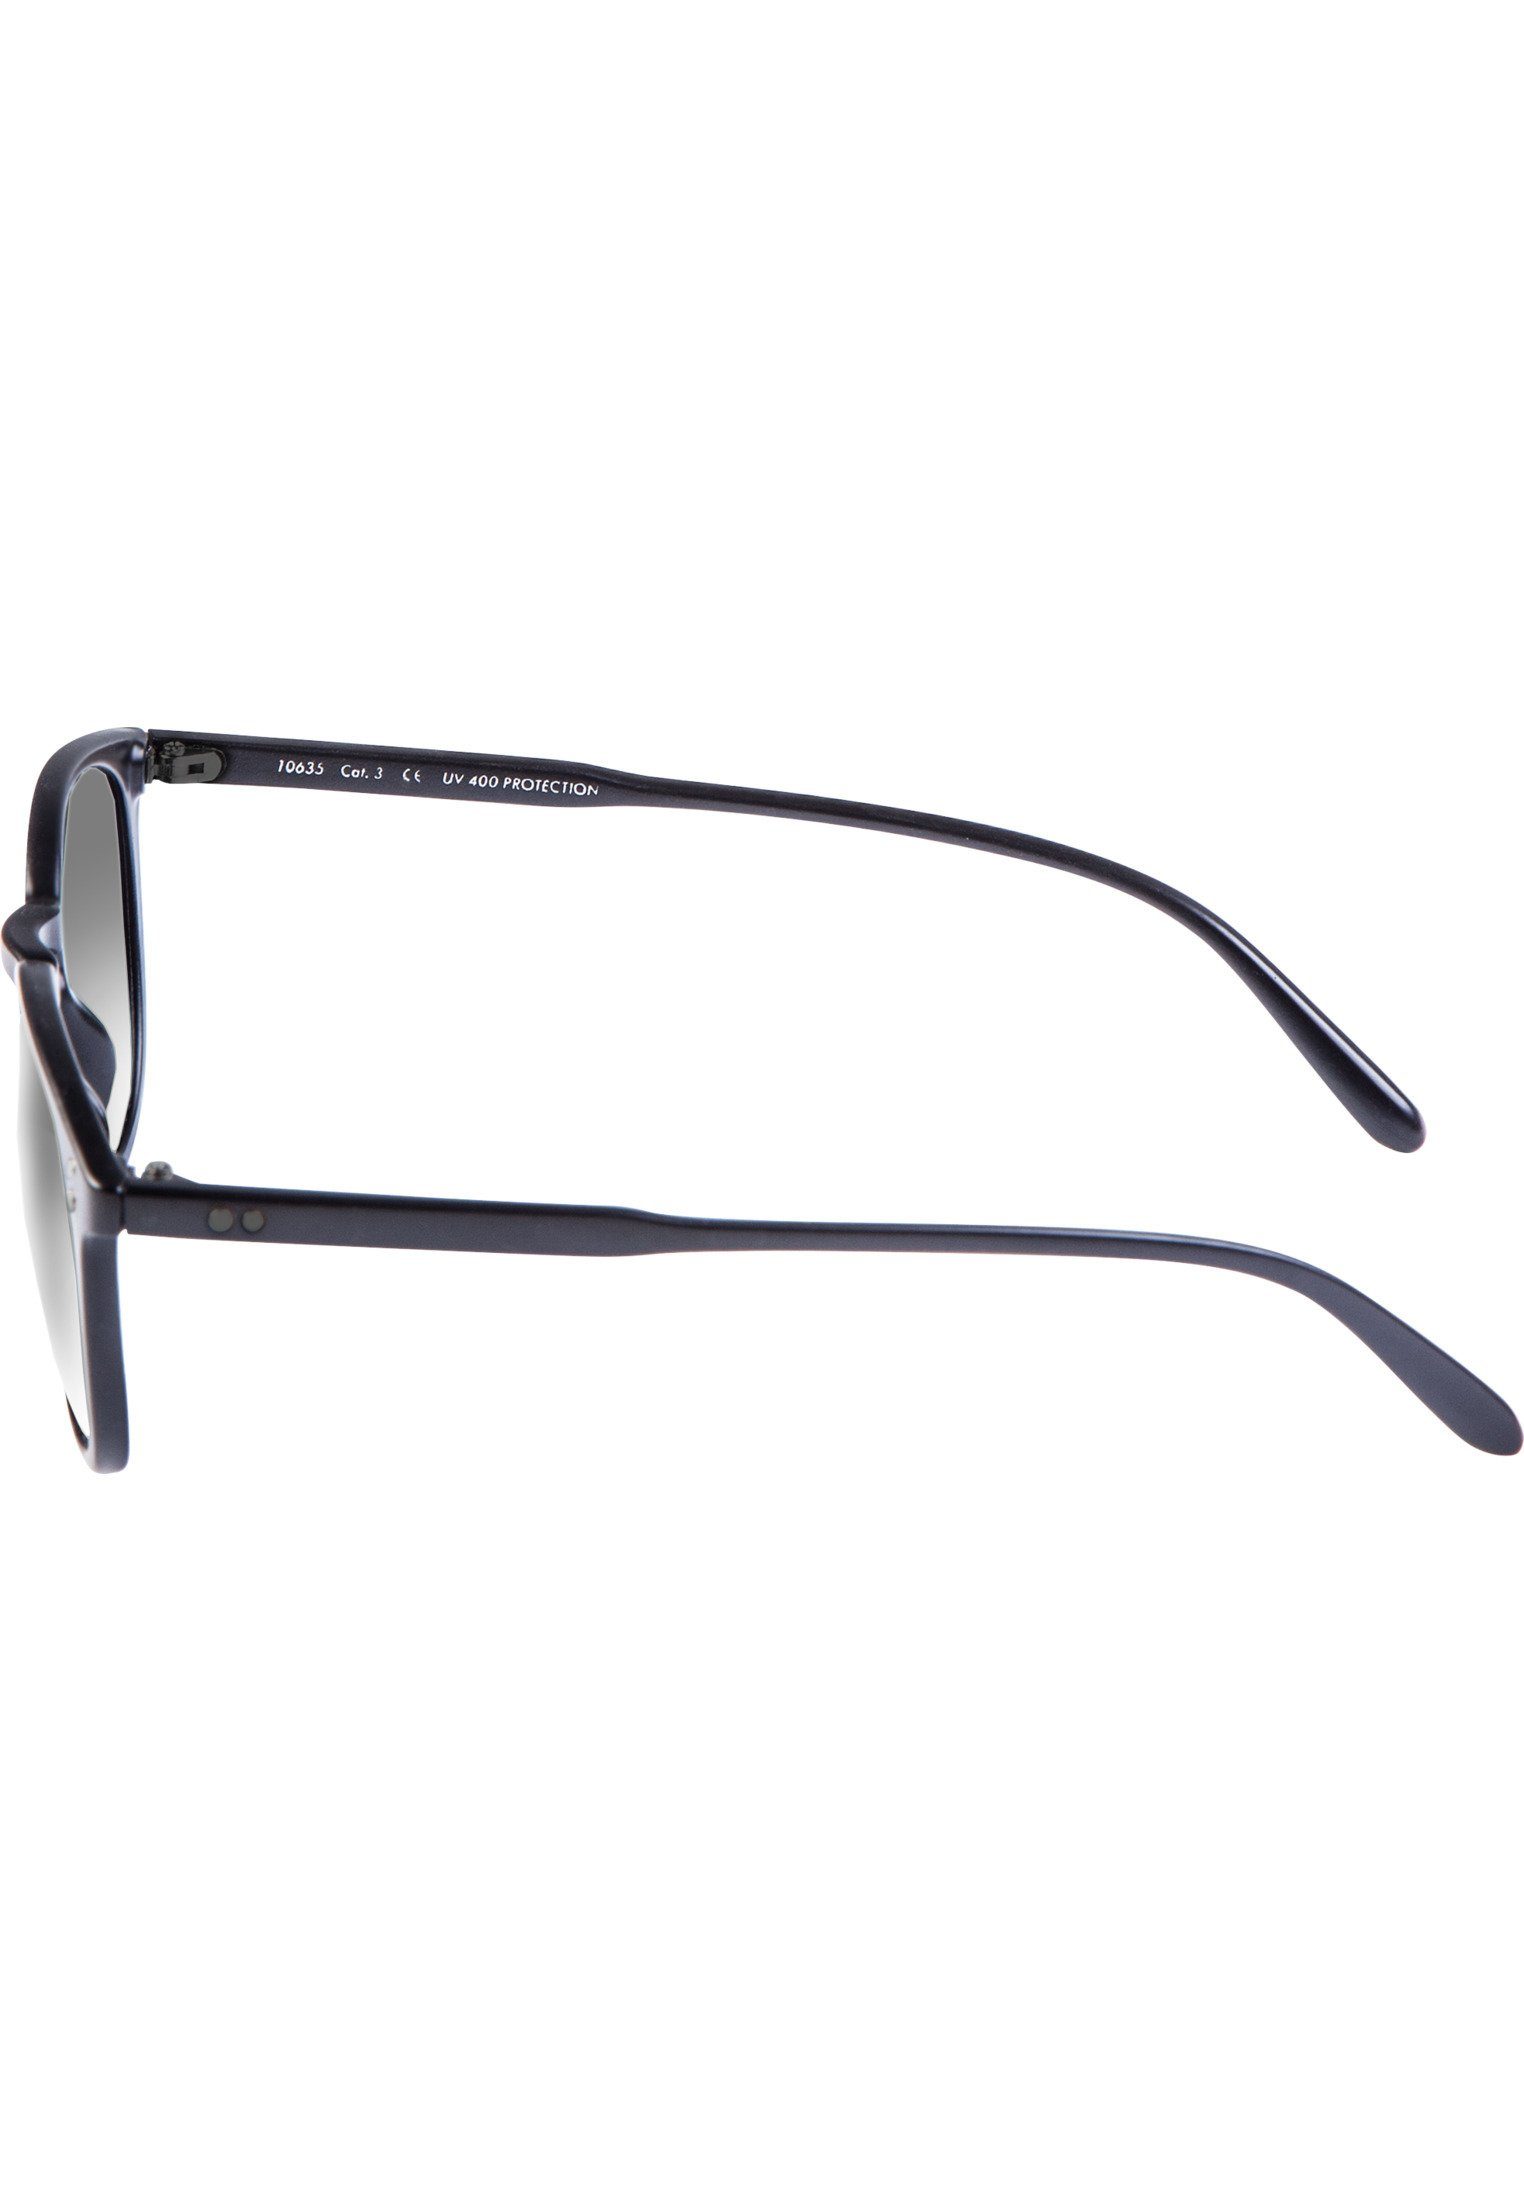 Sonnenbrille Arthur Sunglasses Youth blk/grn Accessoires MSTRDS